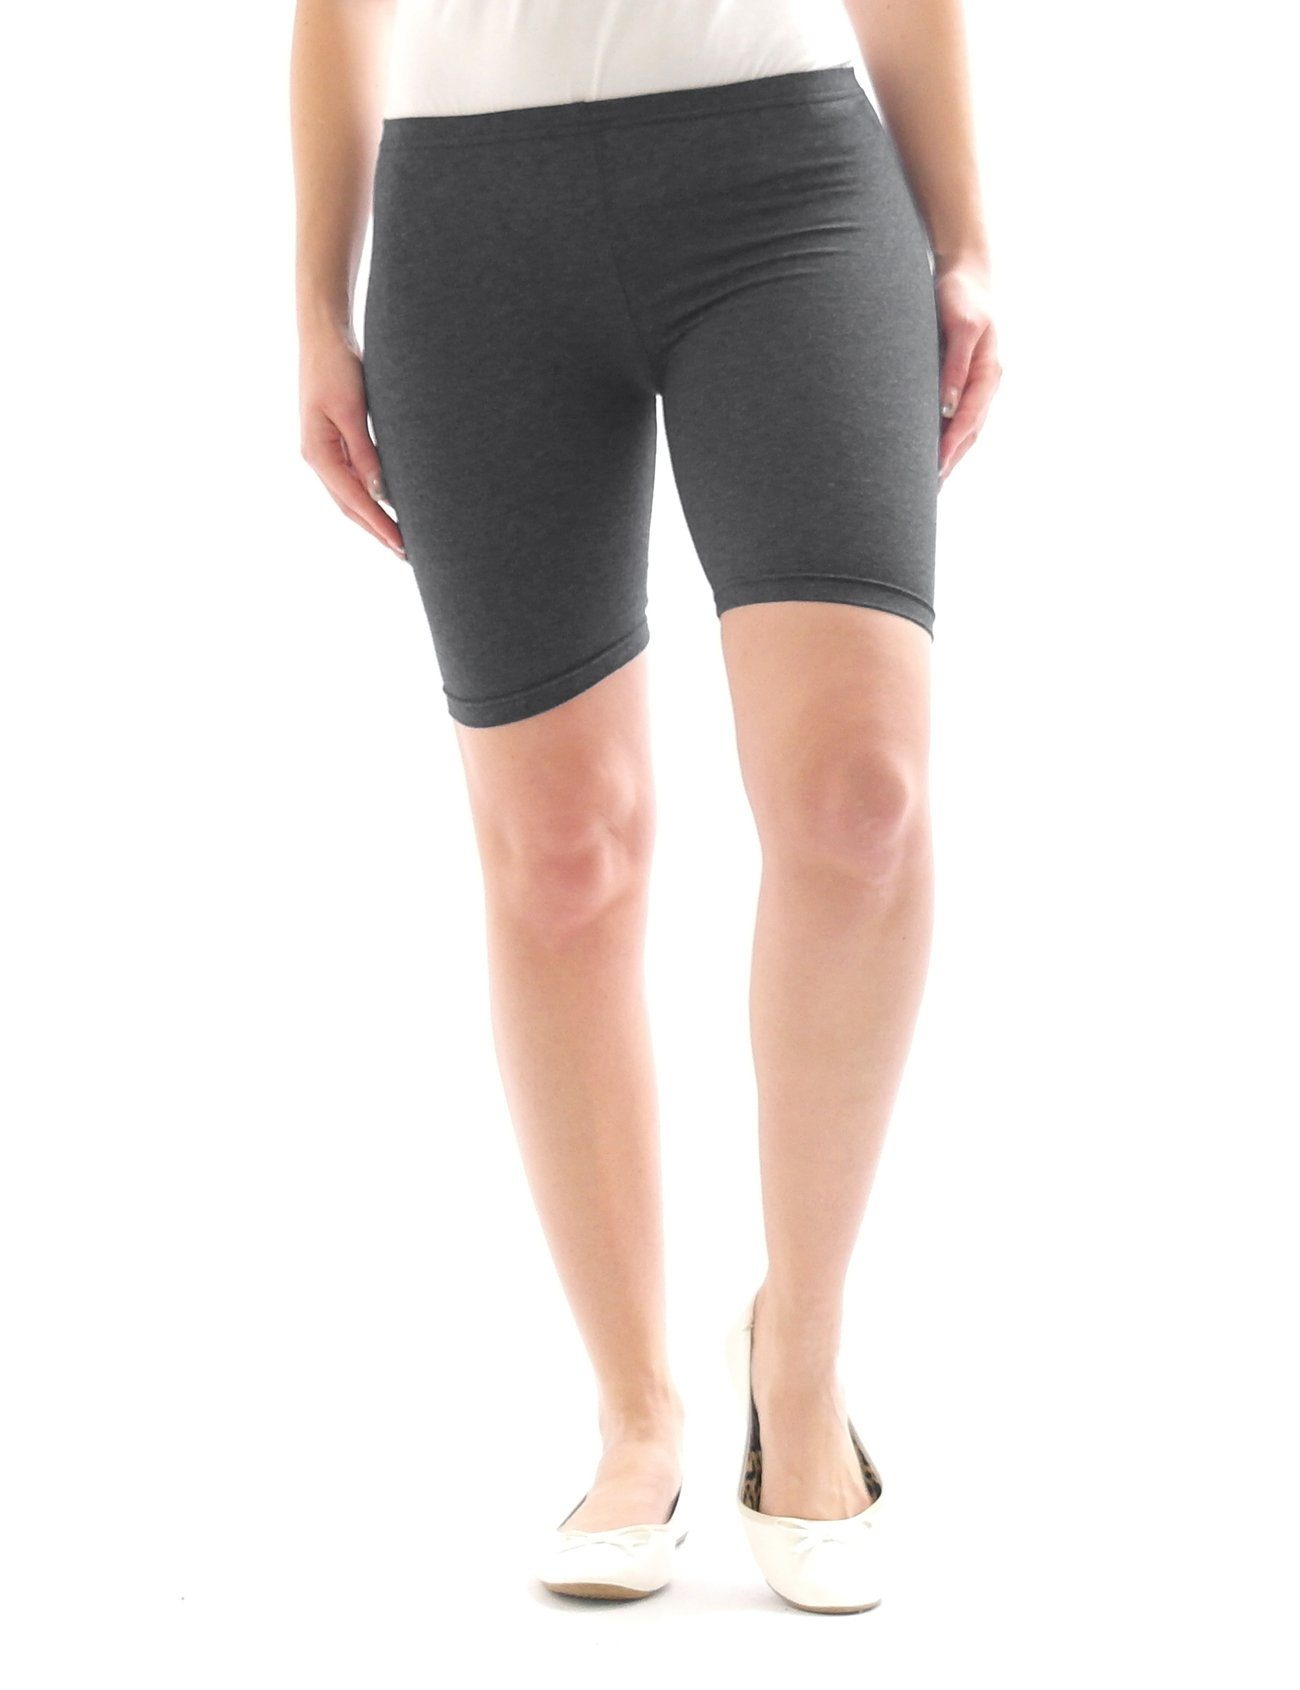 [Günstigster Preis] SYS Shorts Shorts Sport kurze Jogging Leggings Radler DUNKELGRAU Hotpants